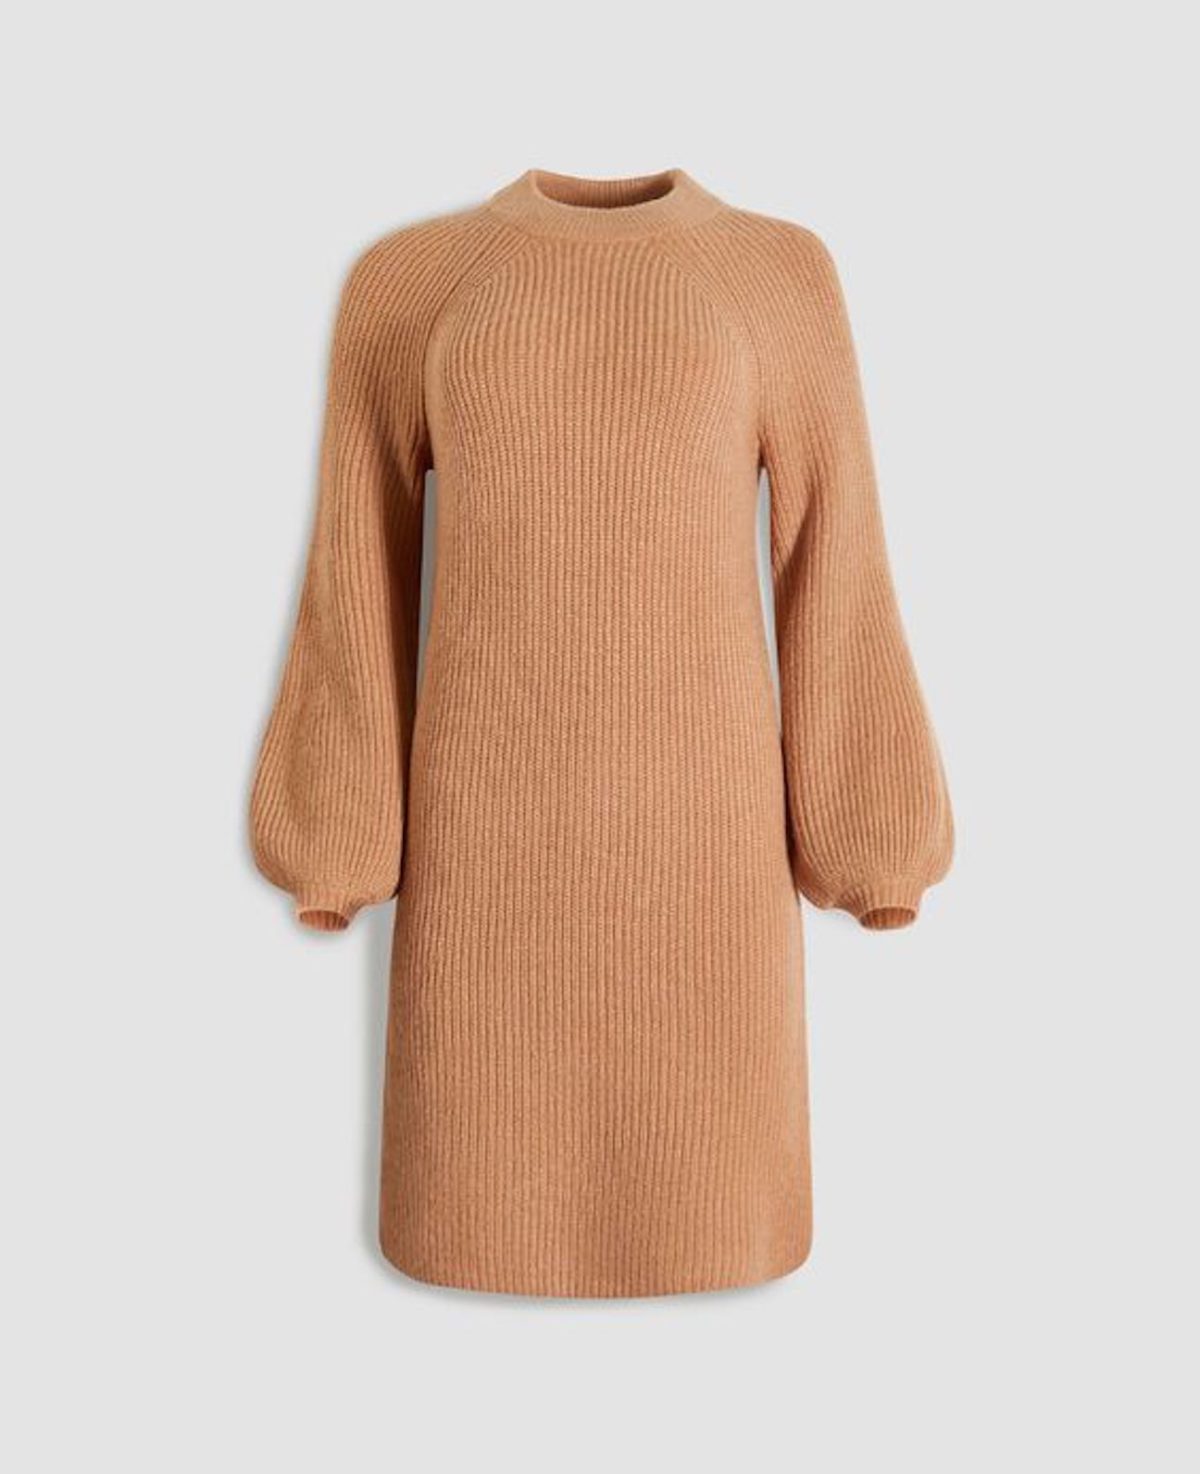 A sweater dress